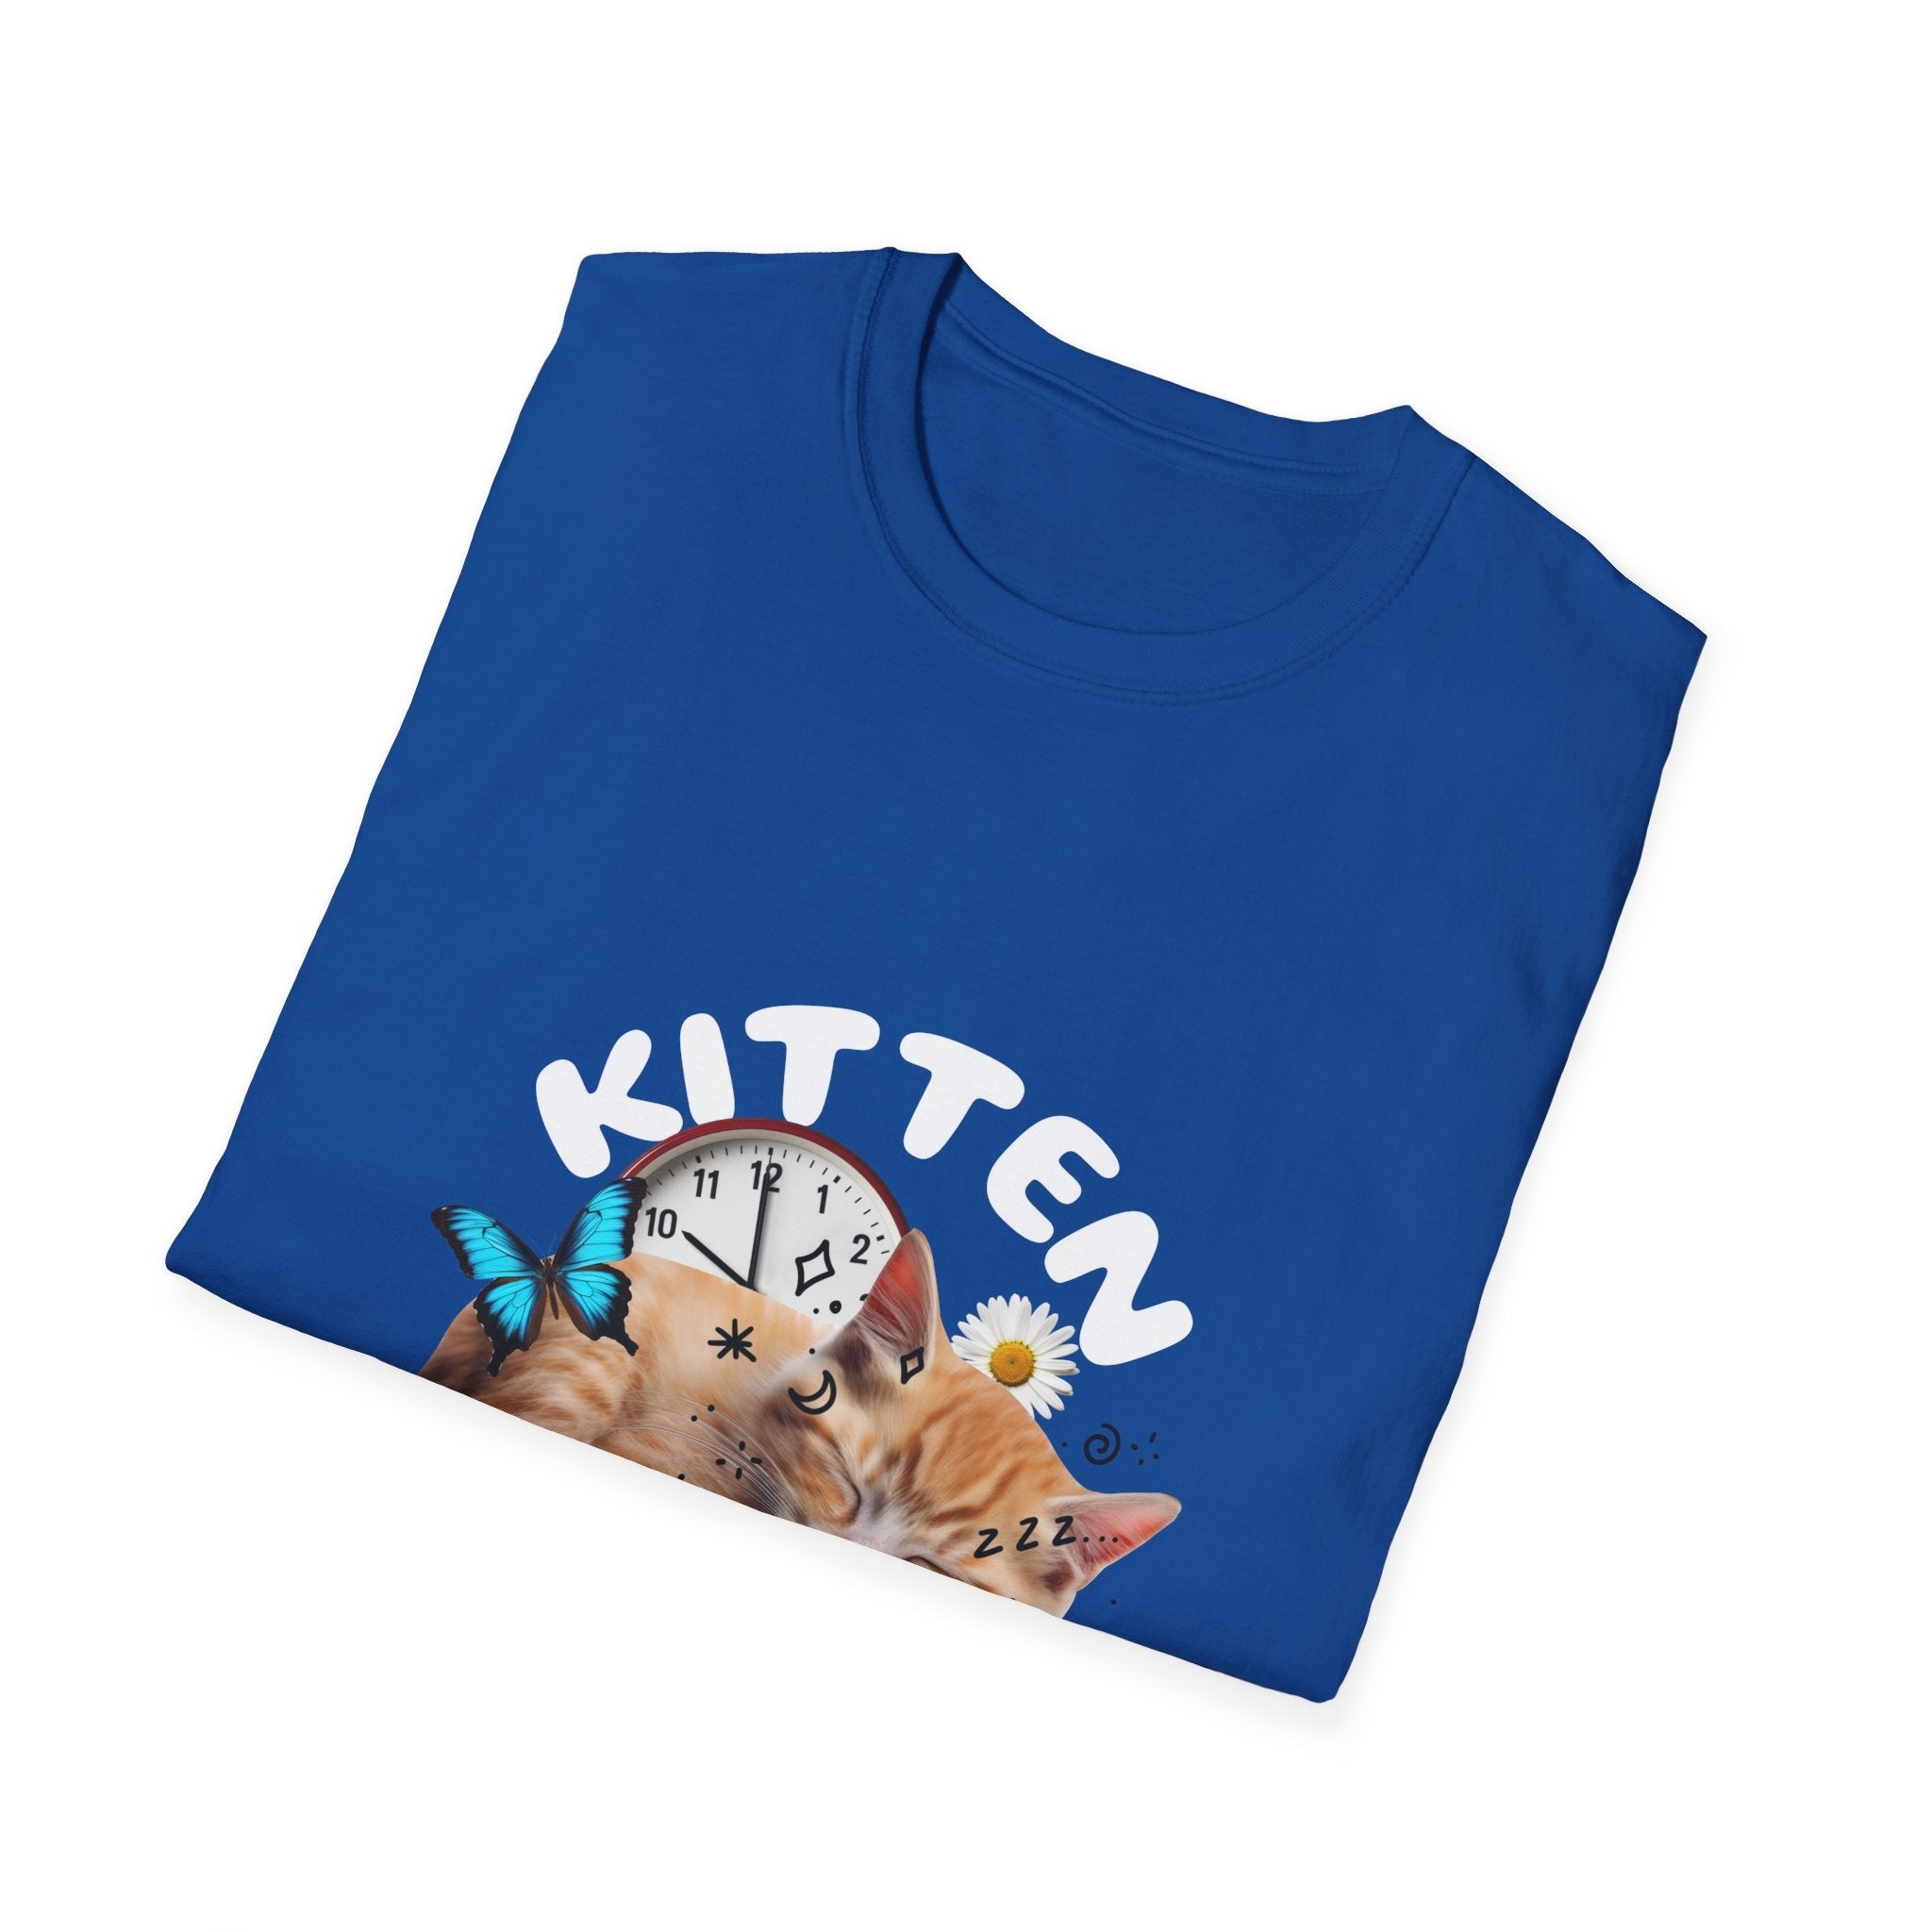 Kitten Nap O' Clock T-Shirt